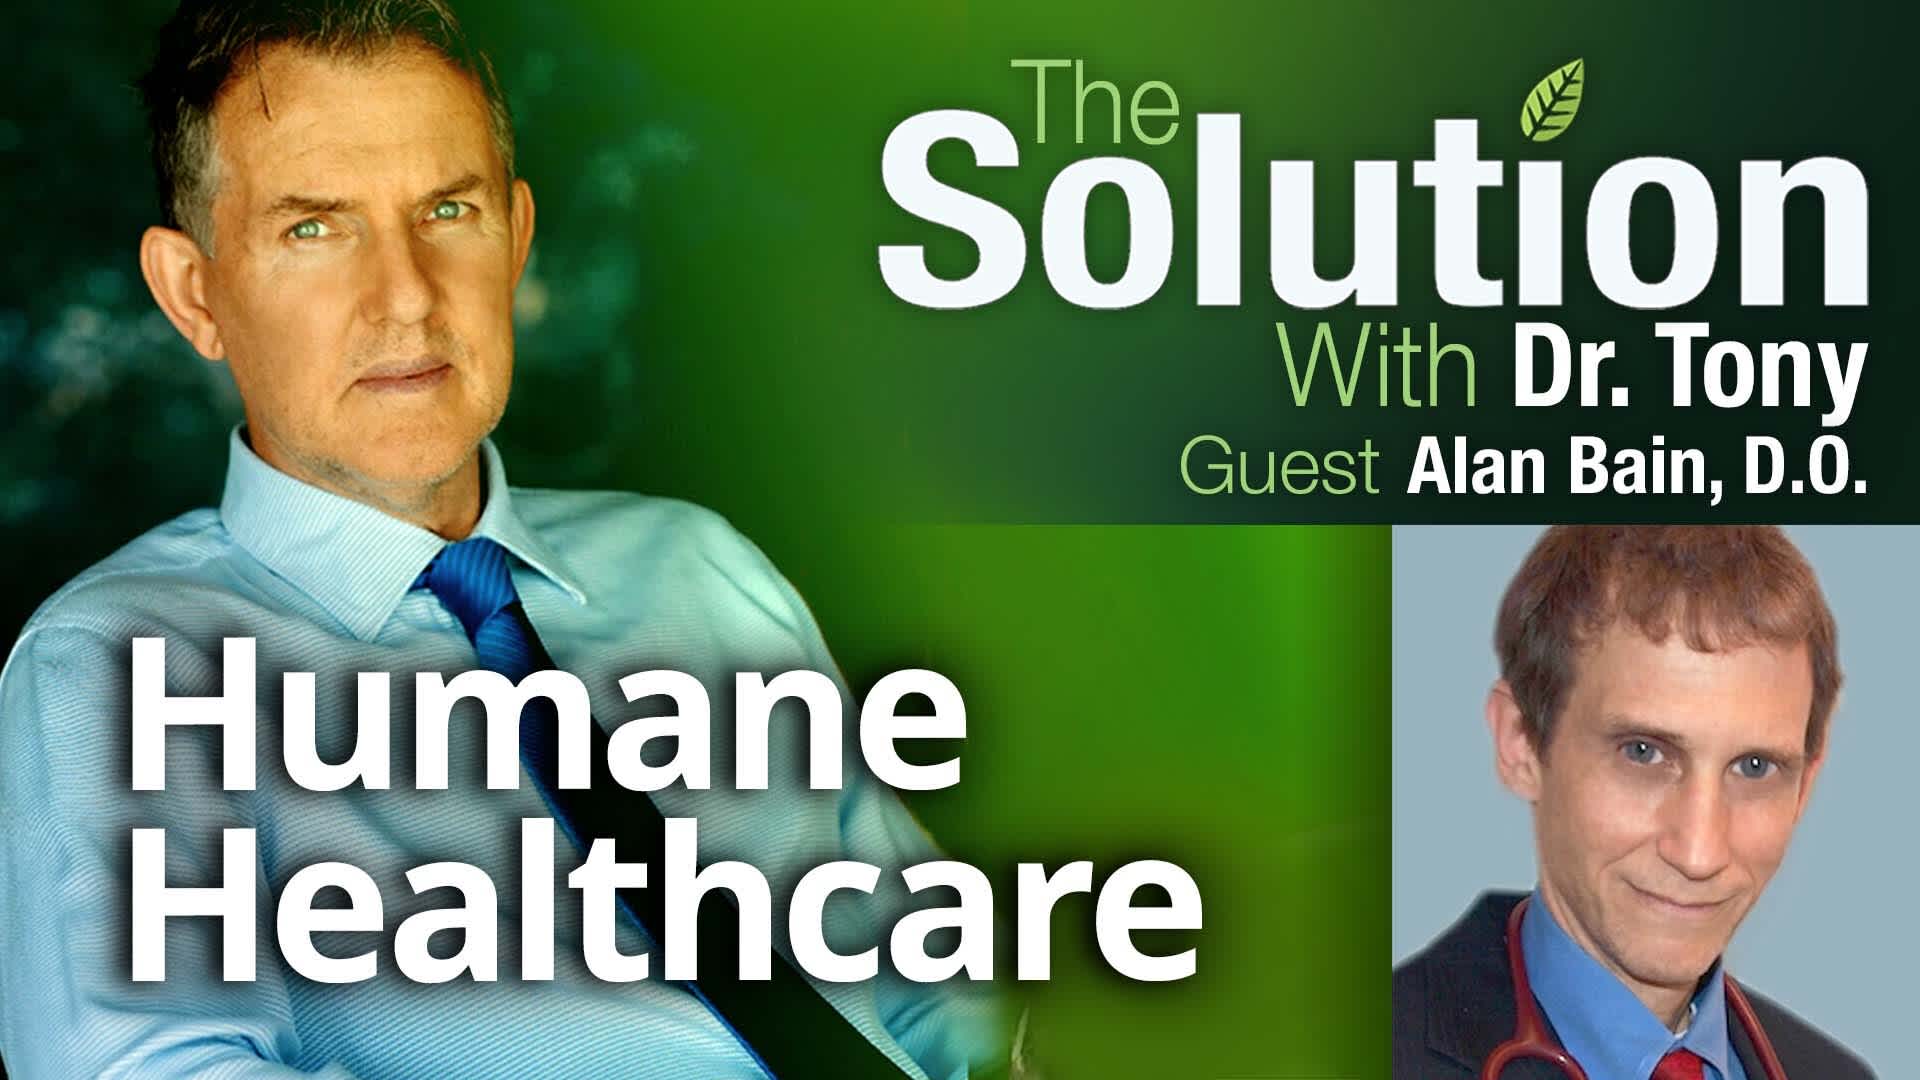 Humane Healthcare With Alan Bain, D.O.